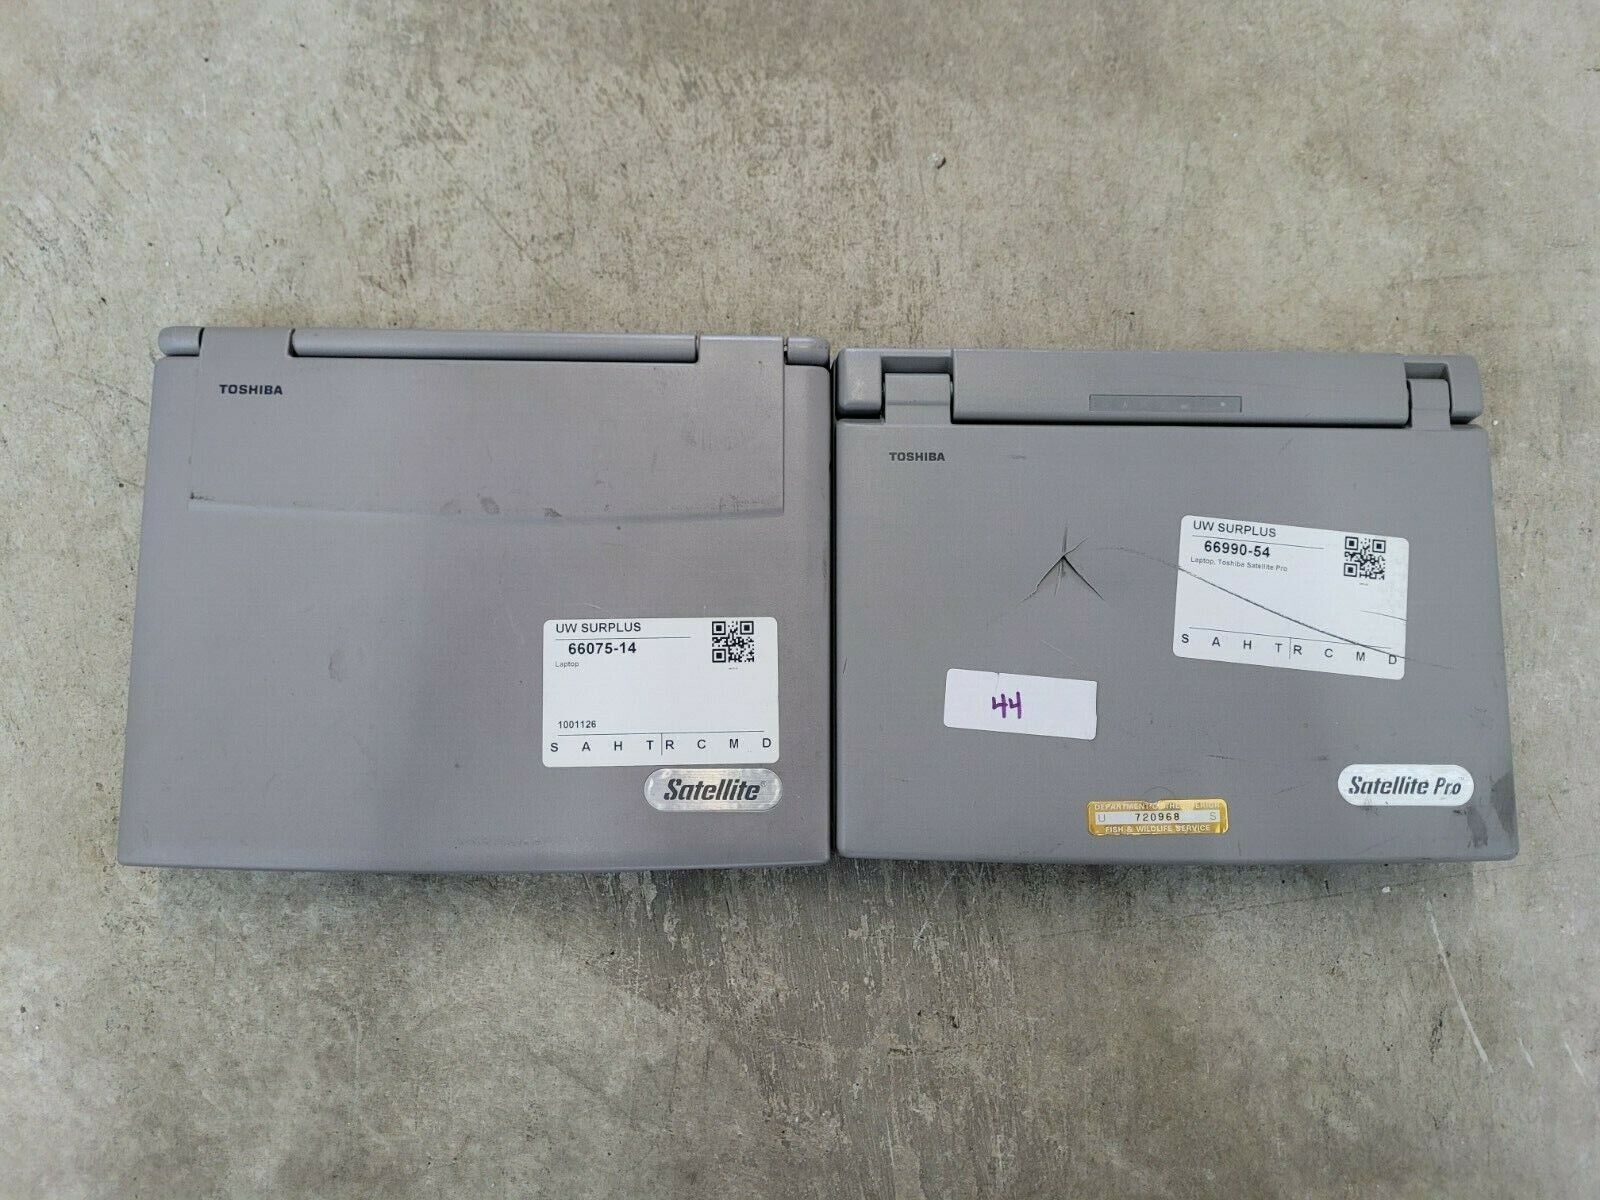 Set of 2 Vintage Toshiba Satellite Satellite Pro 220CDS 400CS Laptops No HDDs